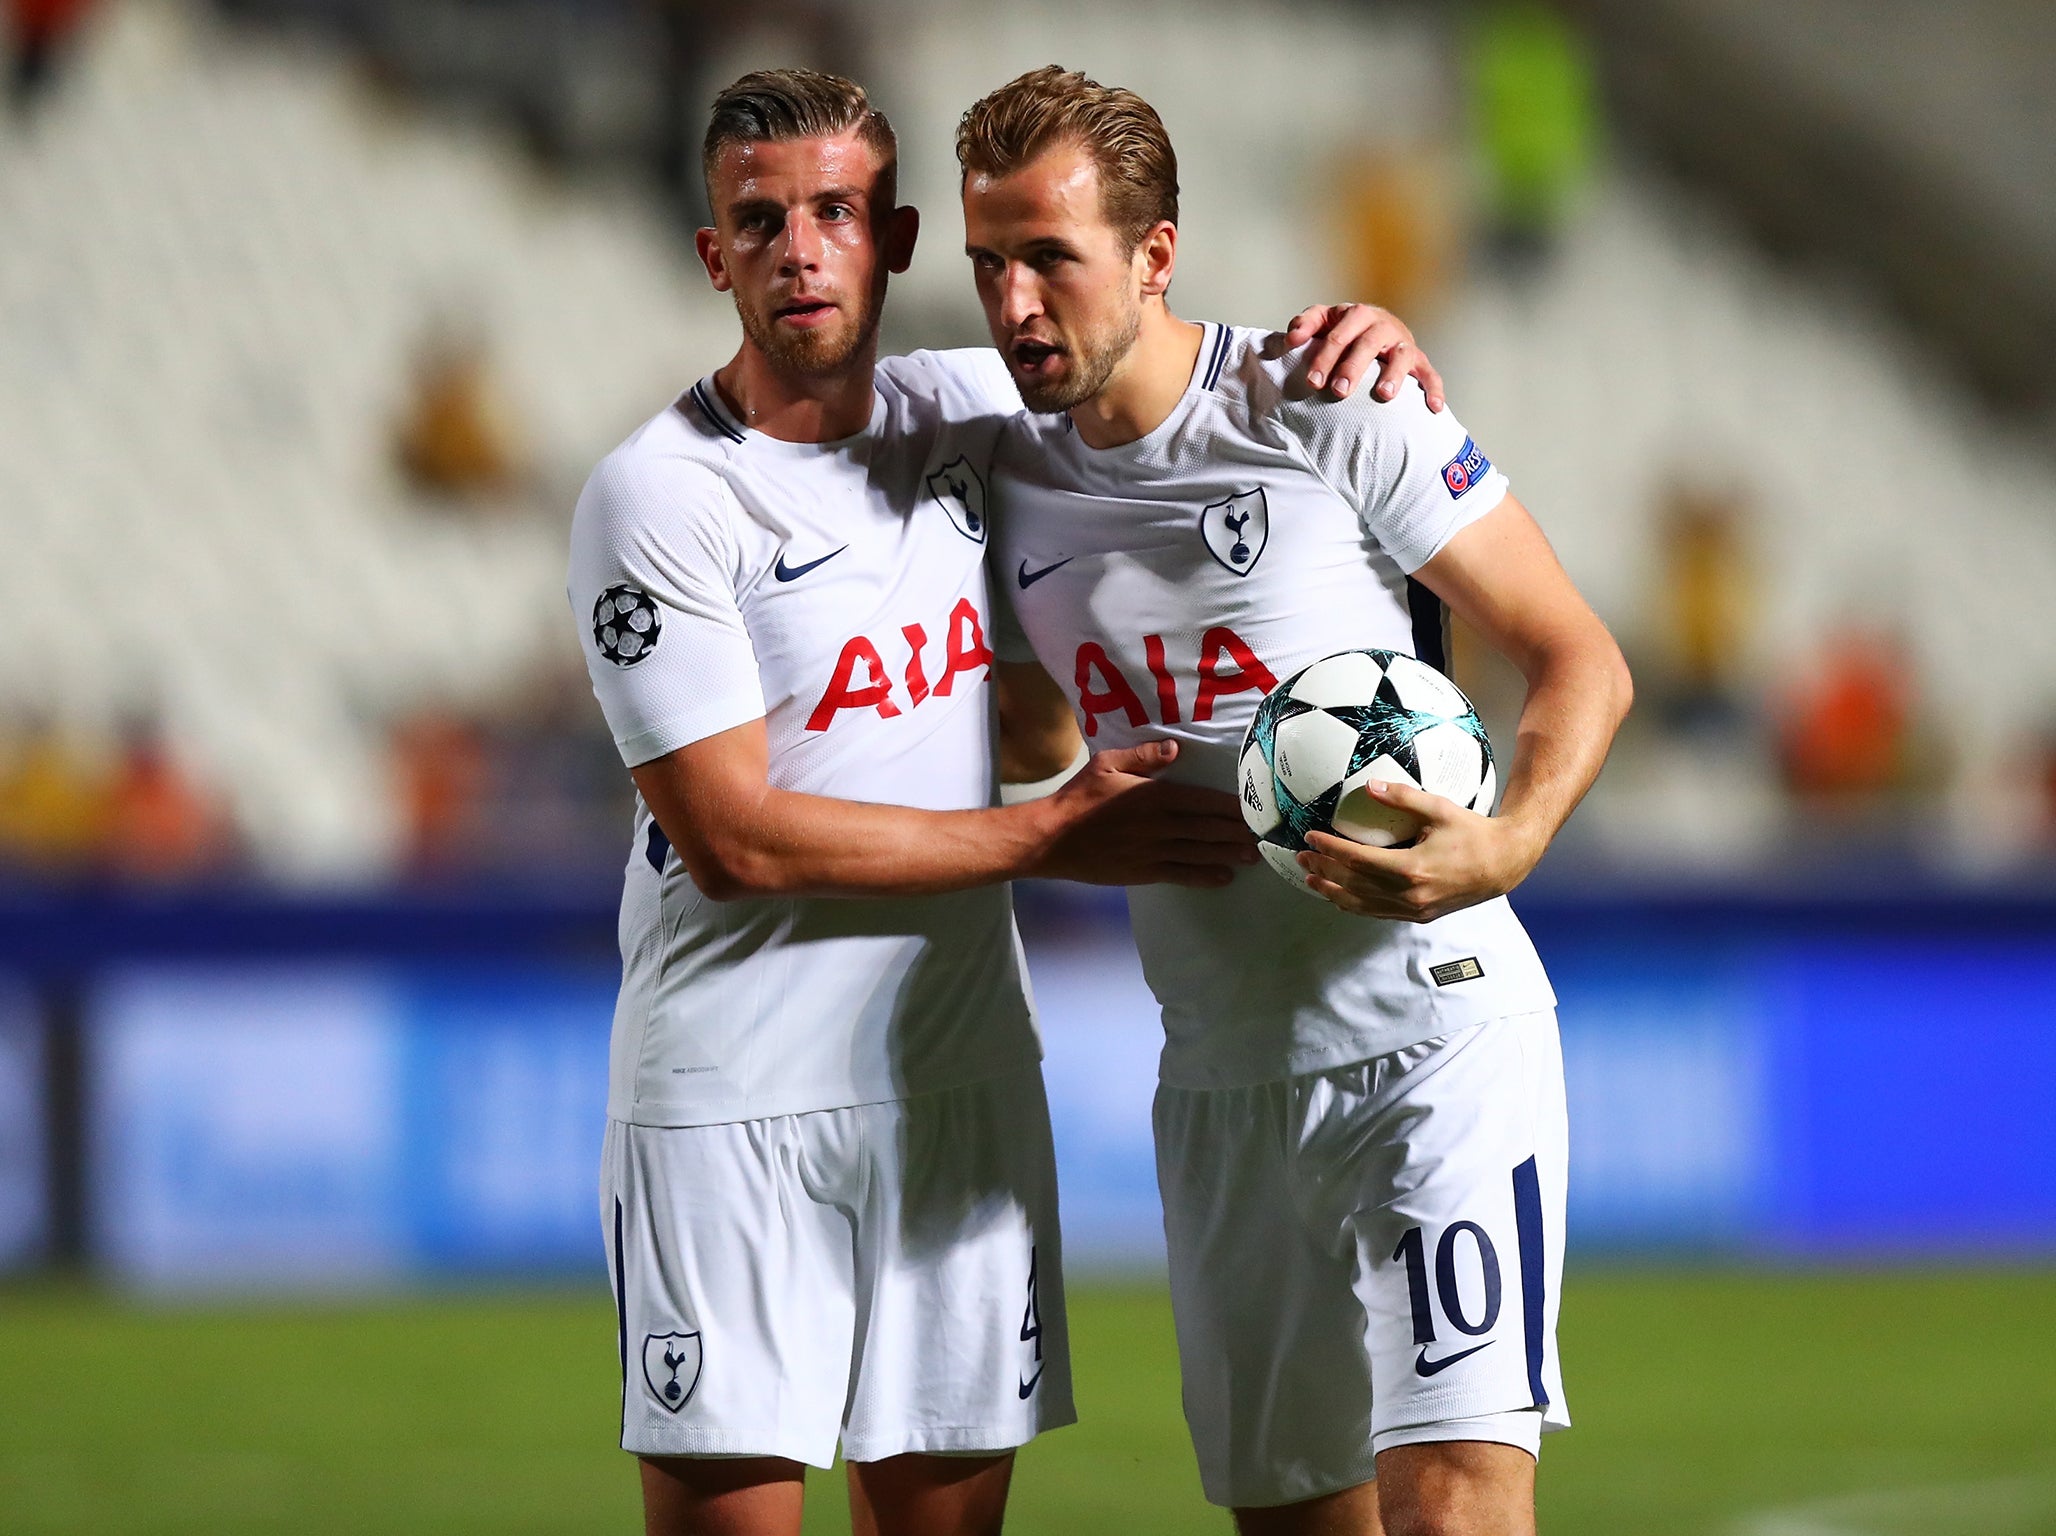 Kane was Tottenham's match-winner once again